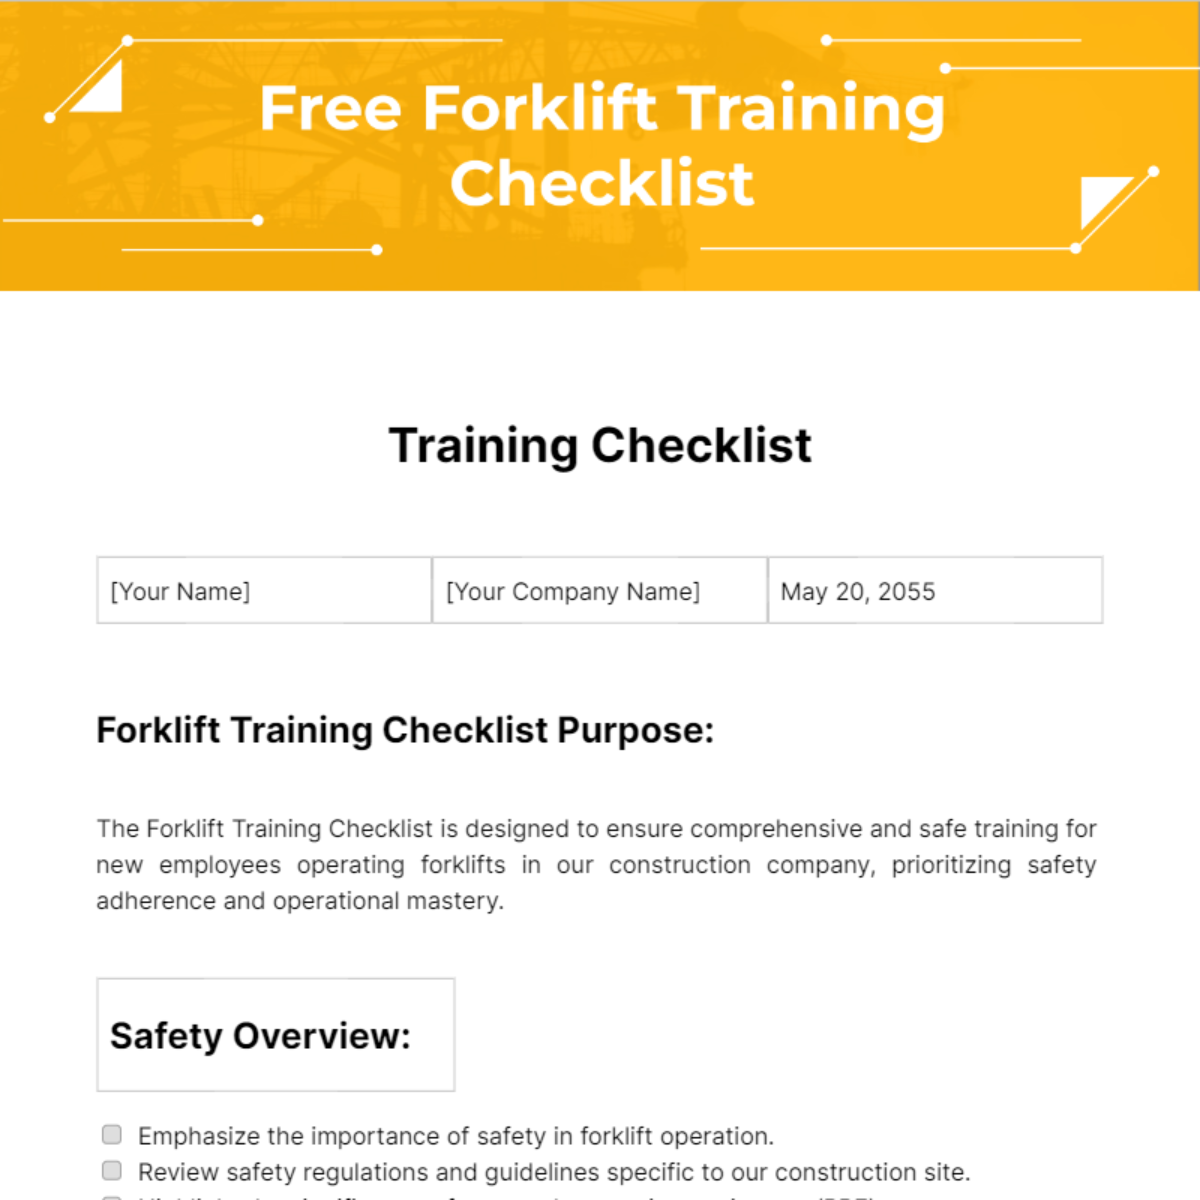 Free Forklift Training Checklist Template